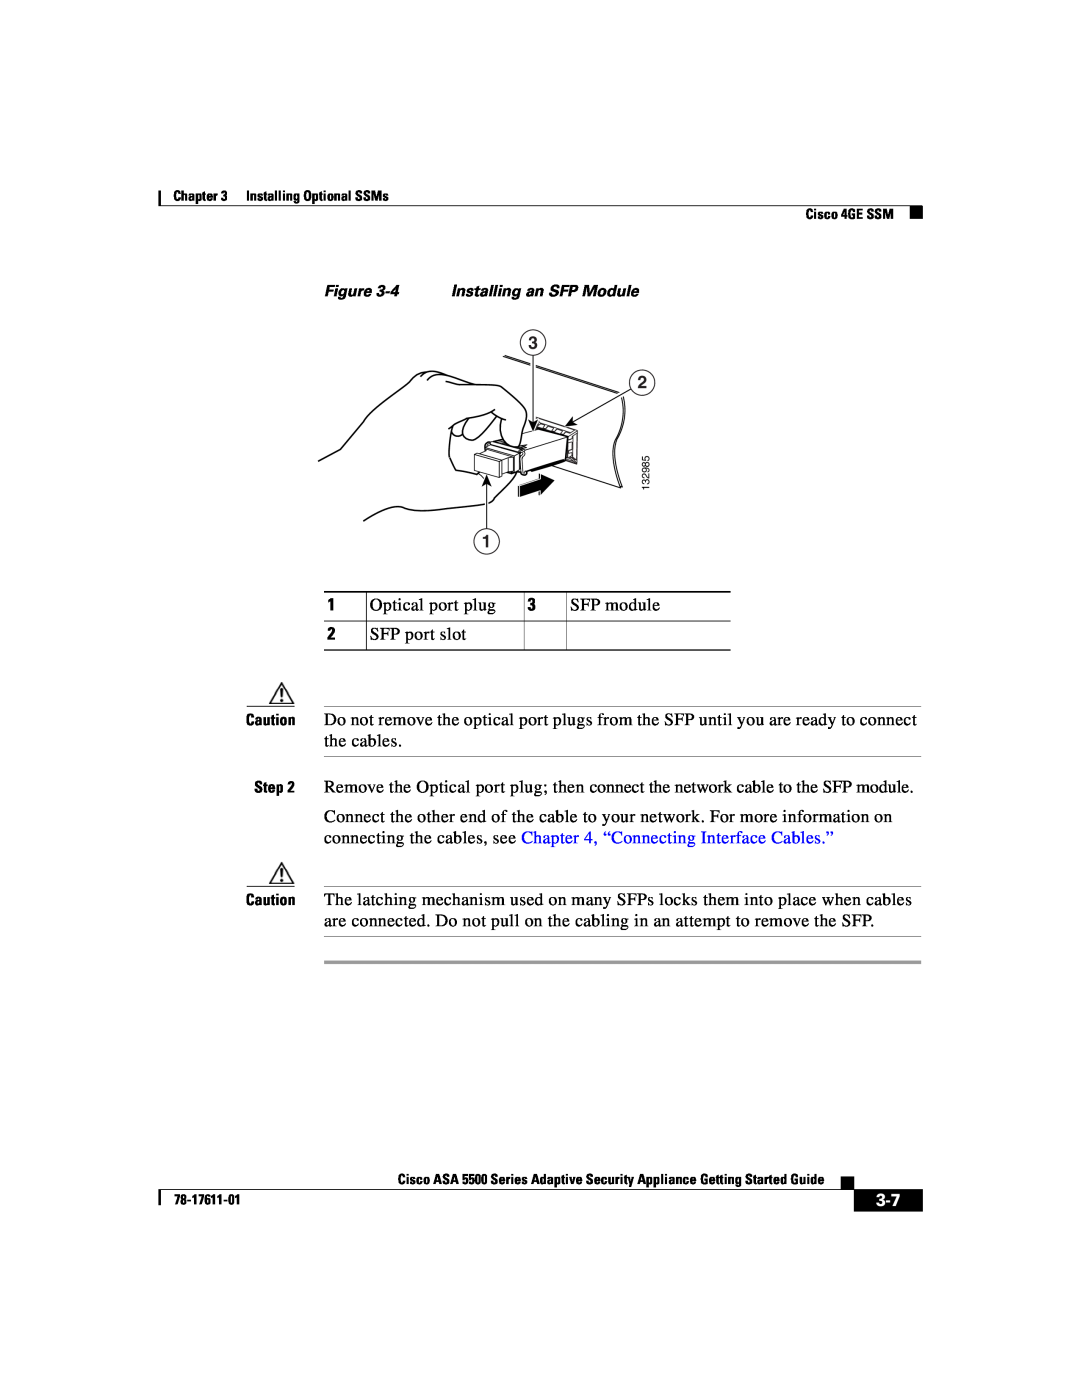 Cisco Systems ASA 5500 manual Optical port plug 